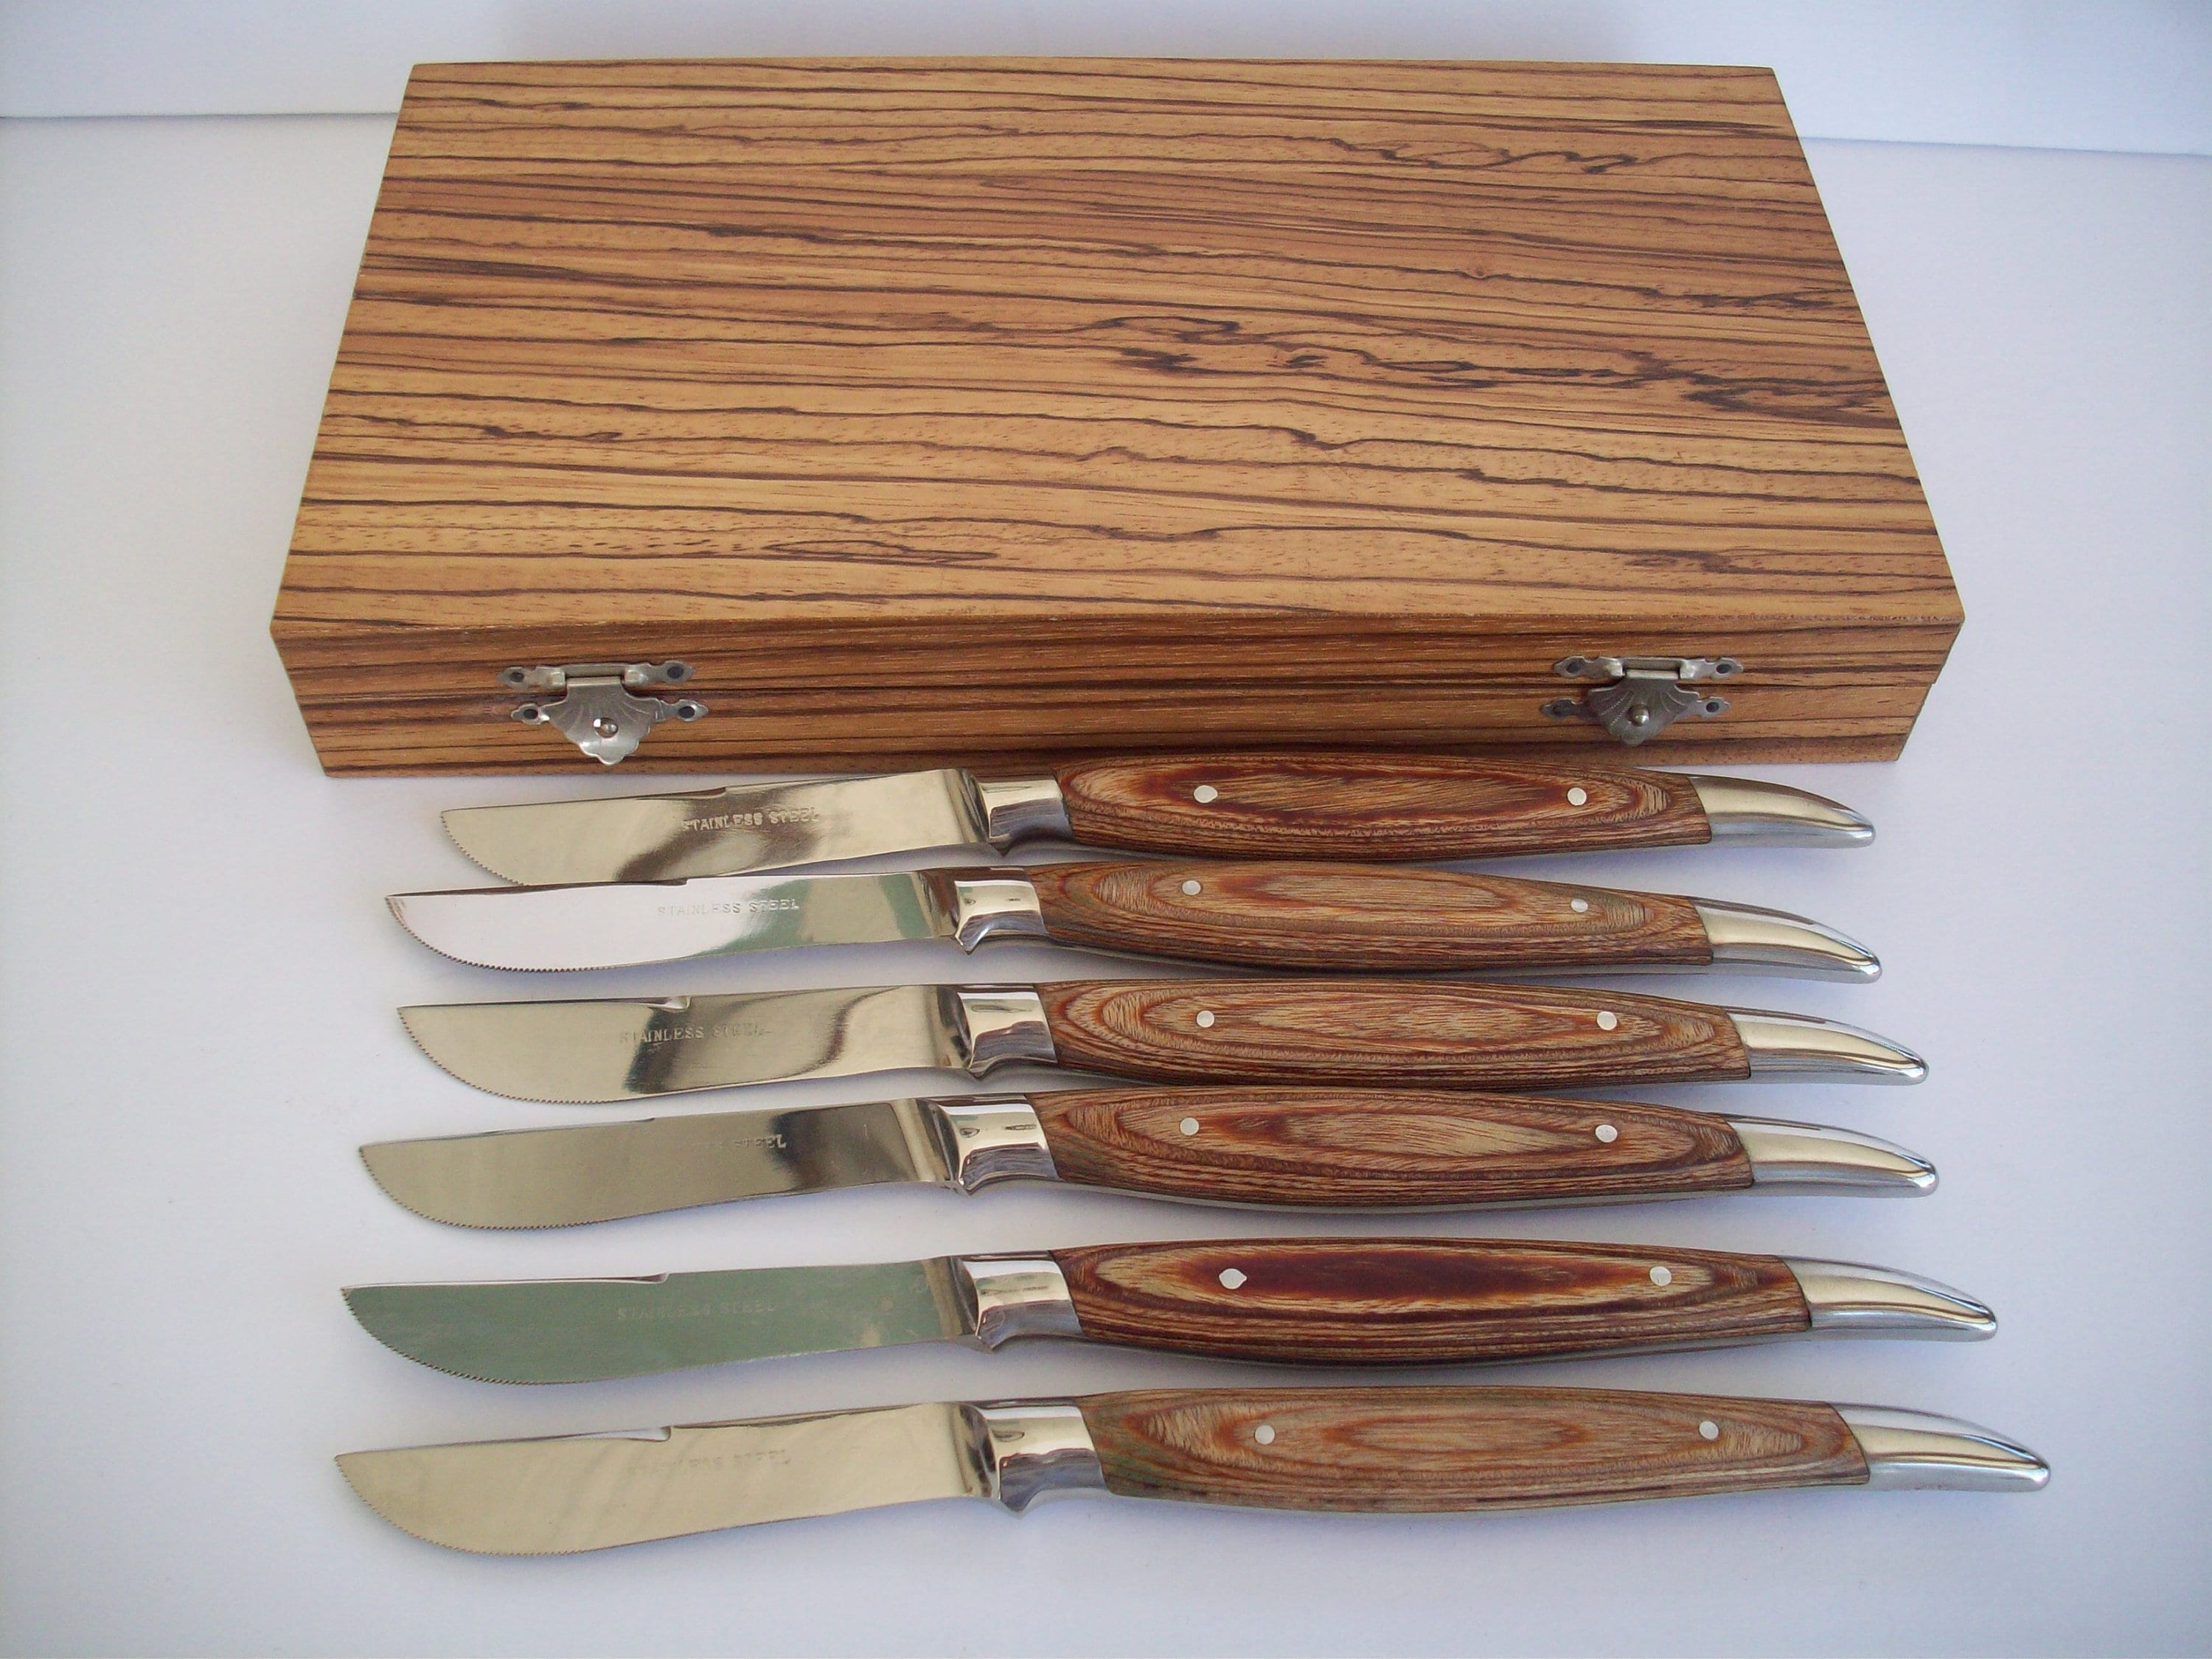 Viking Steakhouse Pakka Wood 6-Piece Steak Knife Set with Gift